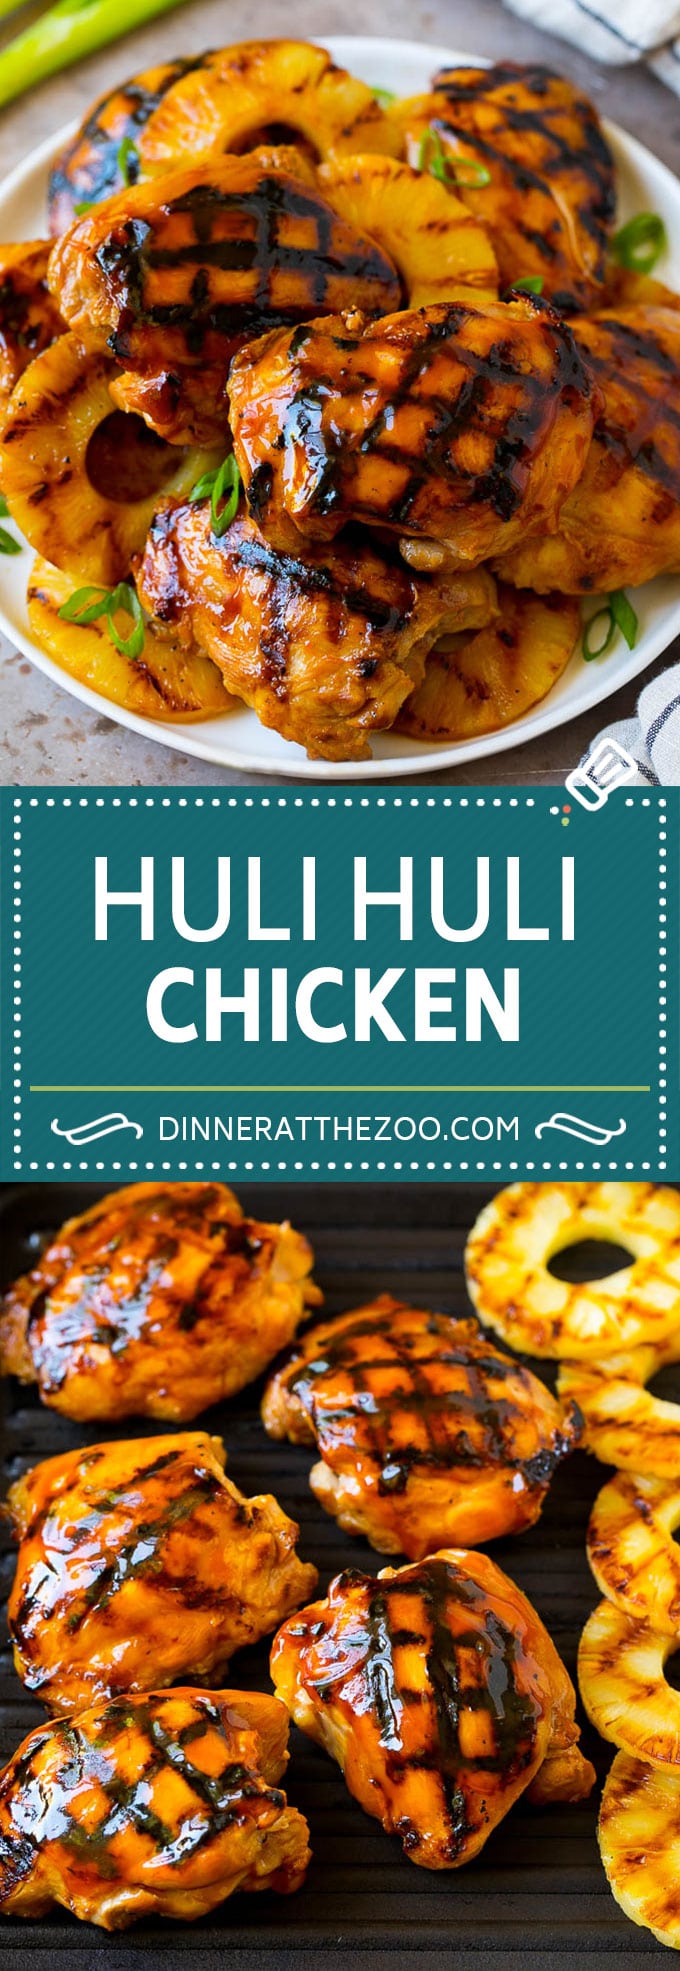 Huli Huli Chicken Recipe | Hawaiian Chicken | Grilled Chicken Thighs #chicken #pineapple #grilling #dinner #dinneratthezoo